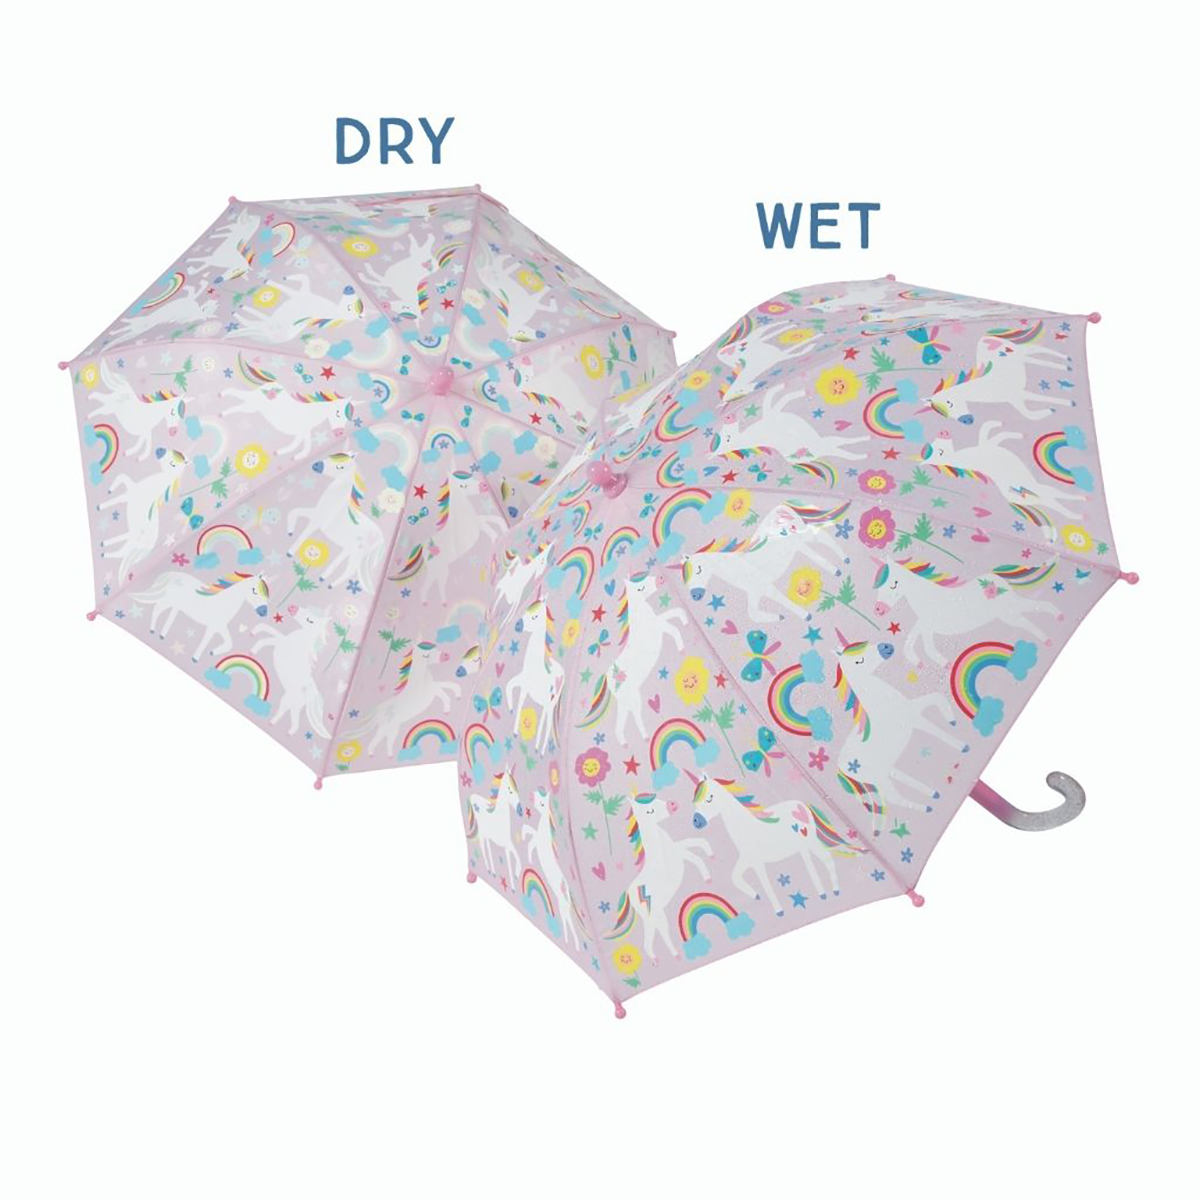 Colour Changing Childrens Umbrella - Rainbows & Unicorns